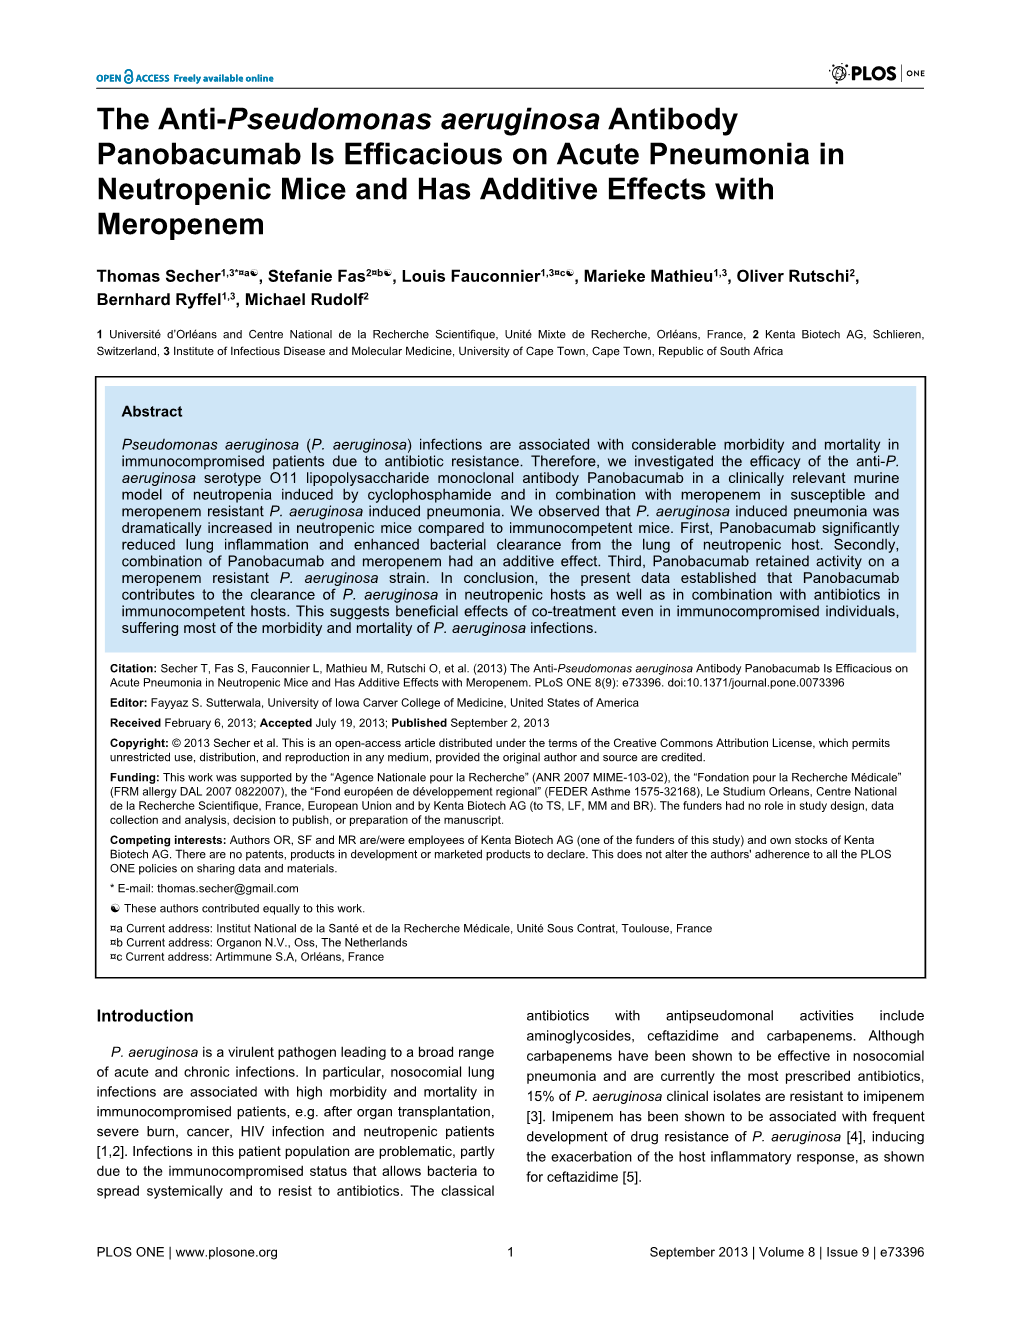 The Anti-Pseudomonas Aeruginosa Antibody Panobacumab Is Efficacious on Acute Pneumonia in Neutropenic Mice and Has Additive Effects with Meropenem